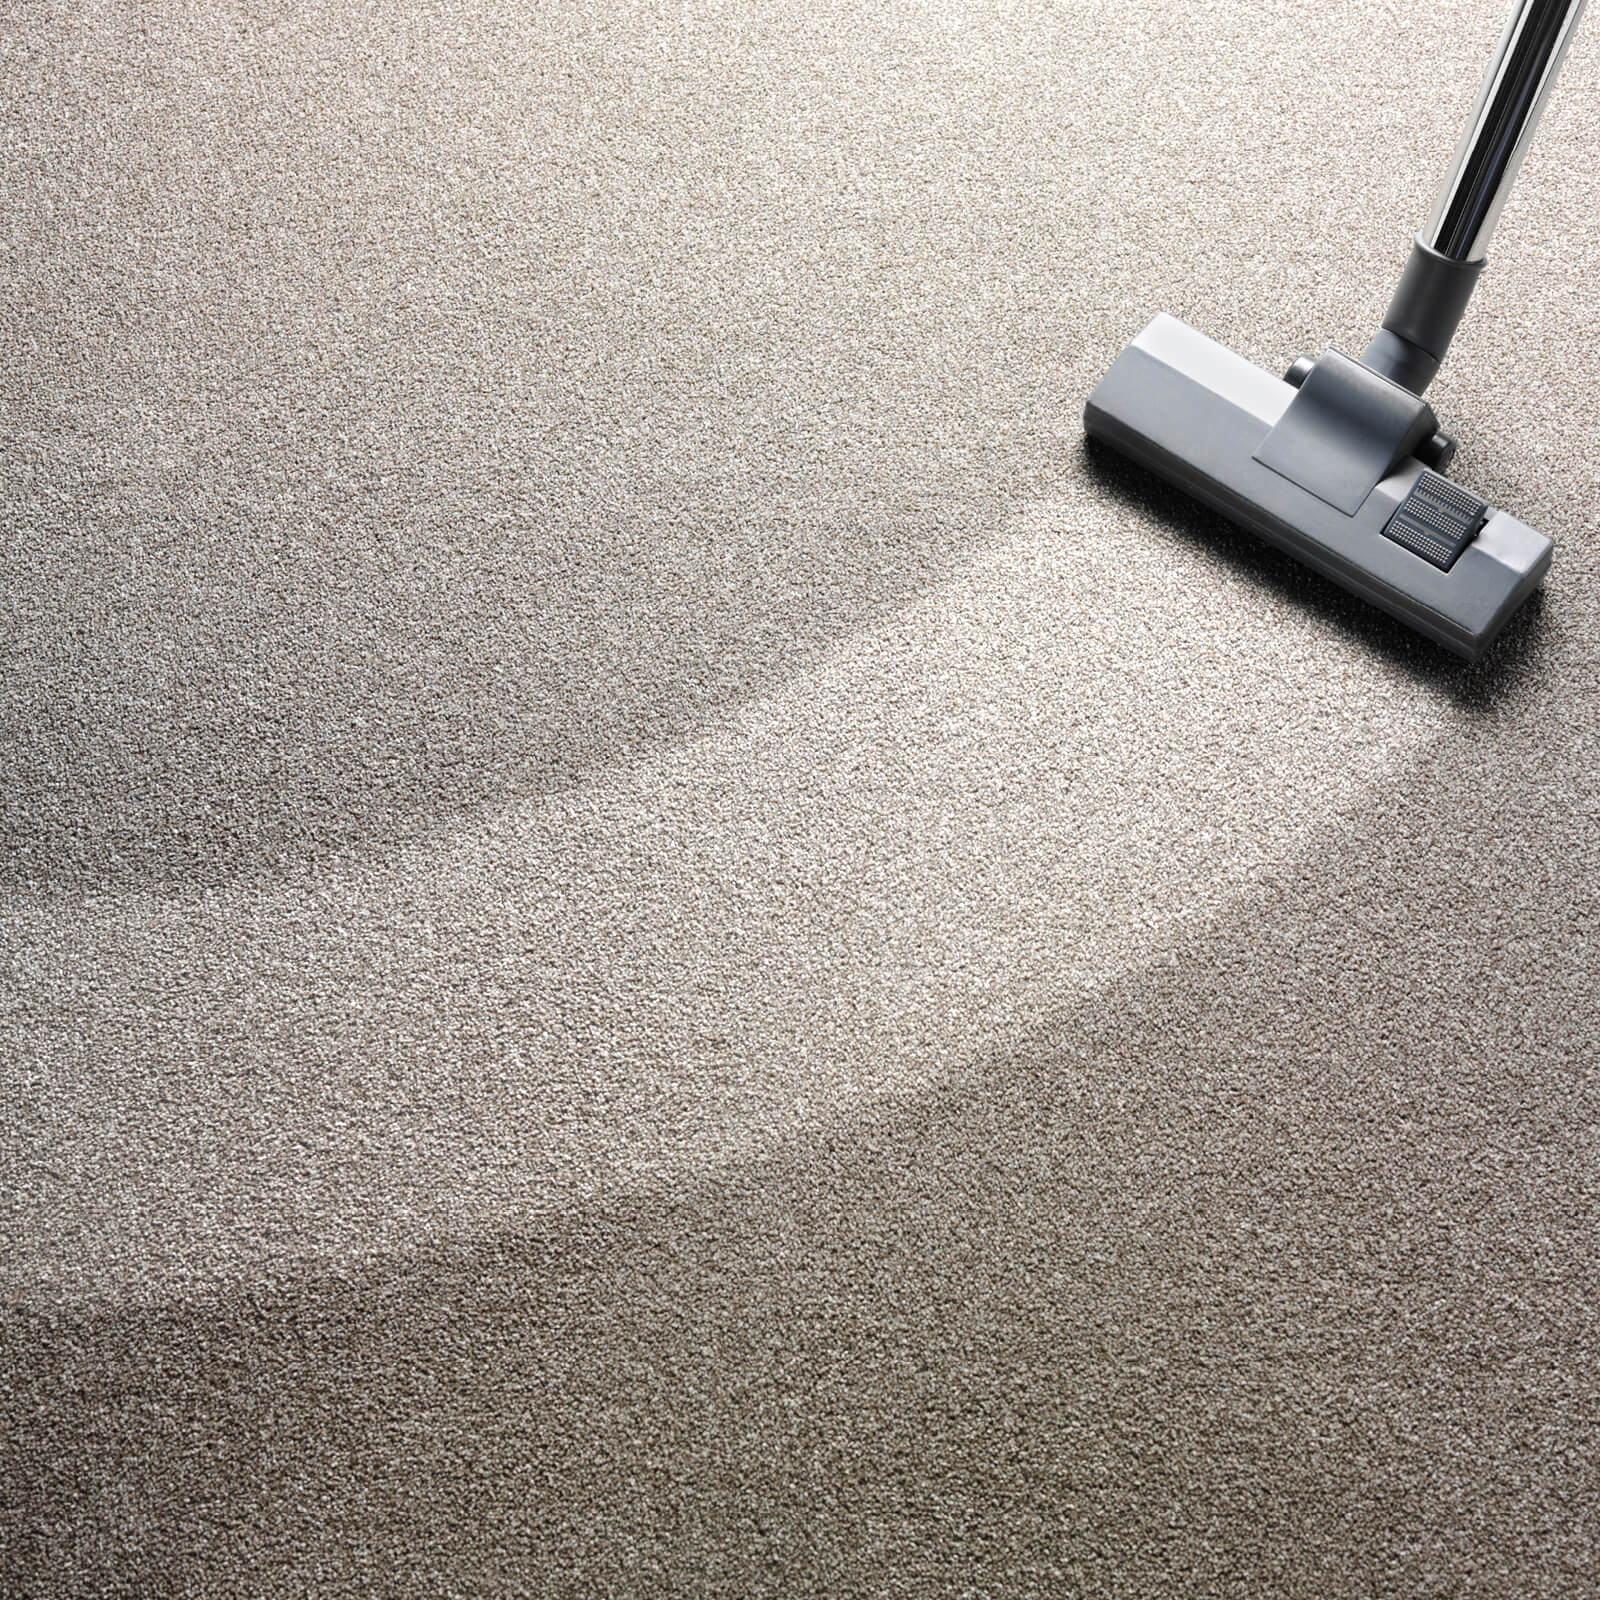 Carpet cleaning | Carpetland USA